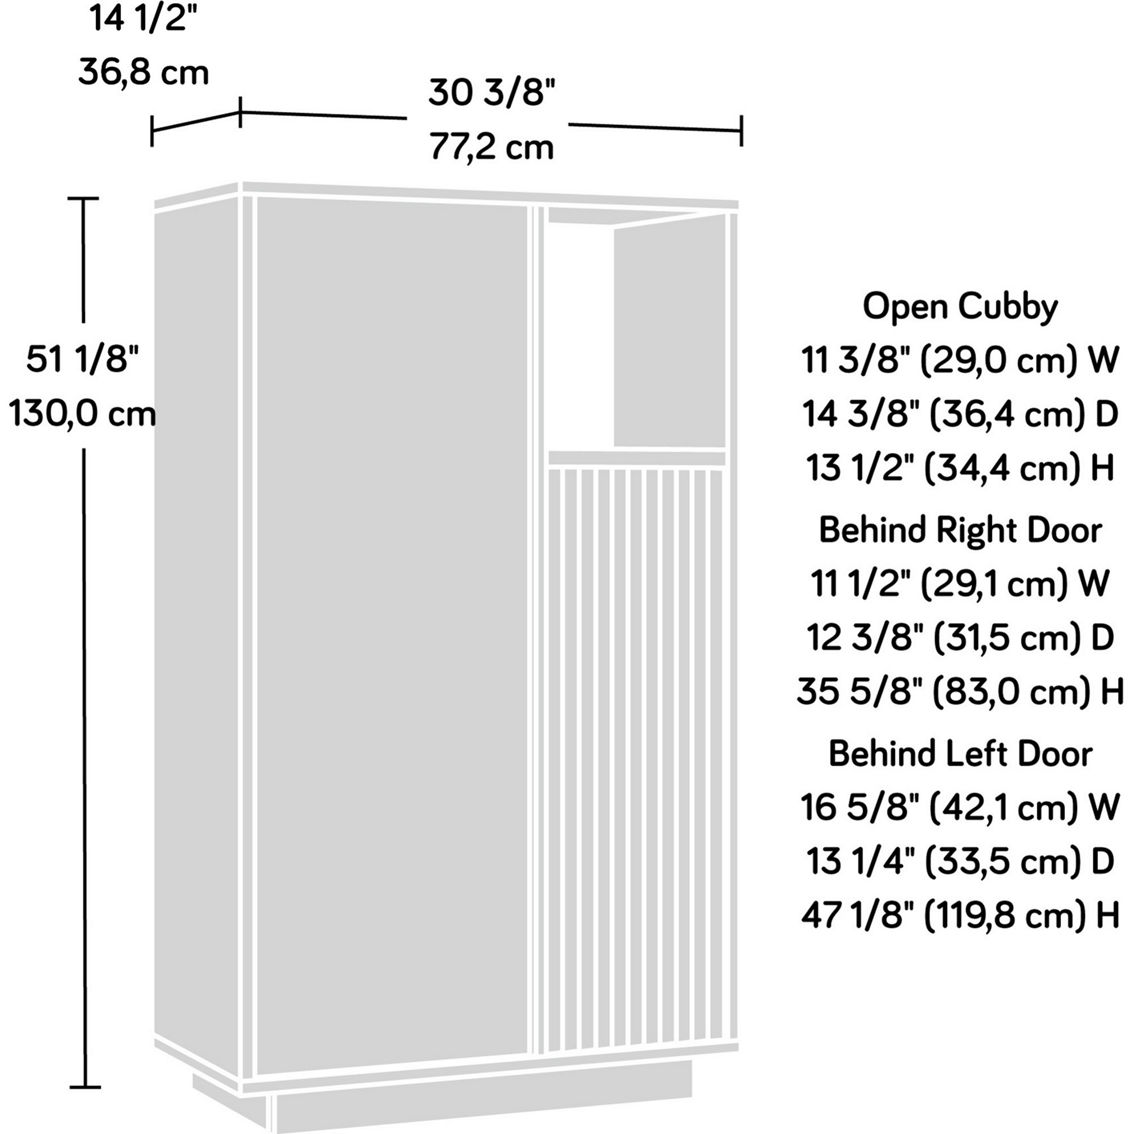 Sauder Contemporary Storage Cabinet in Ashen Oak - Image 3 of 3